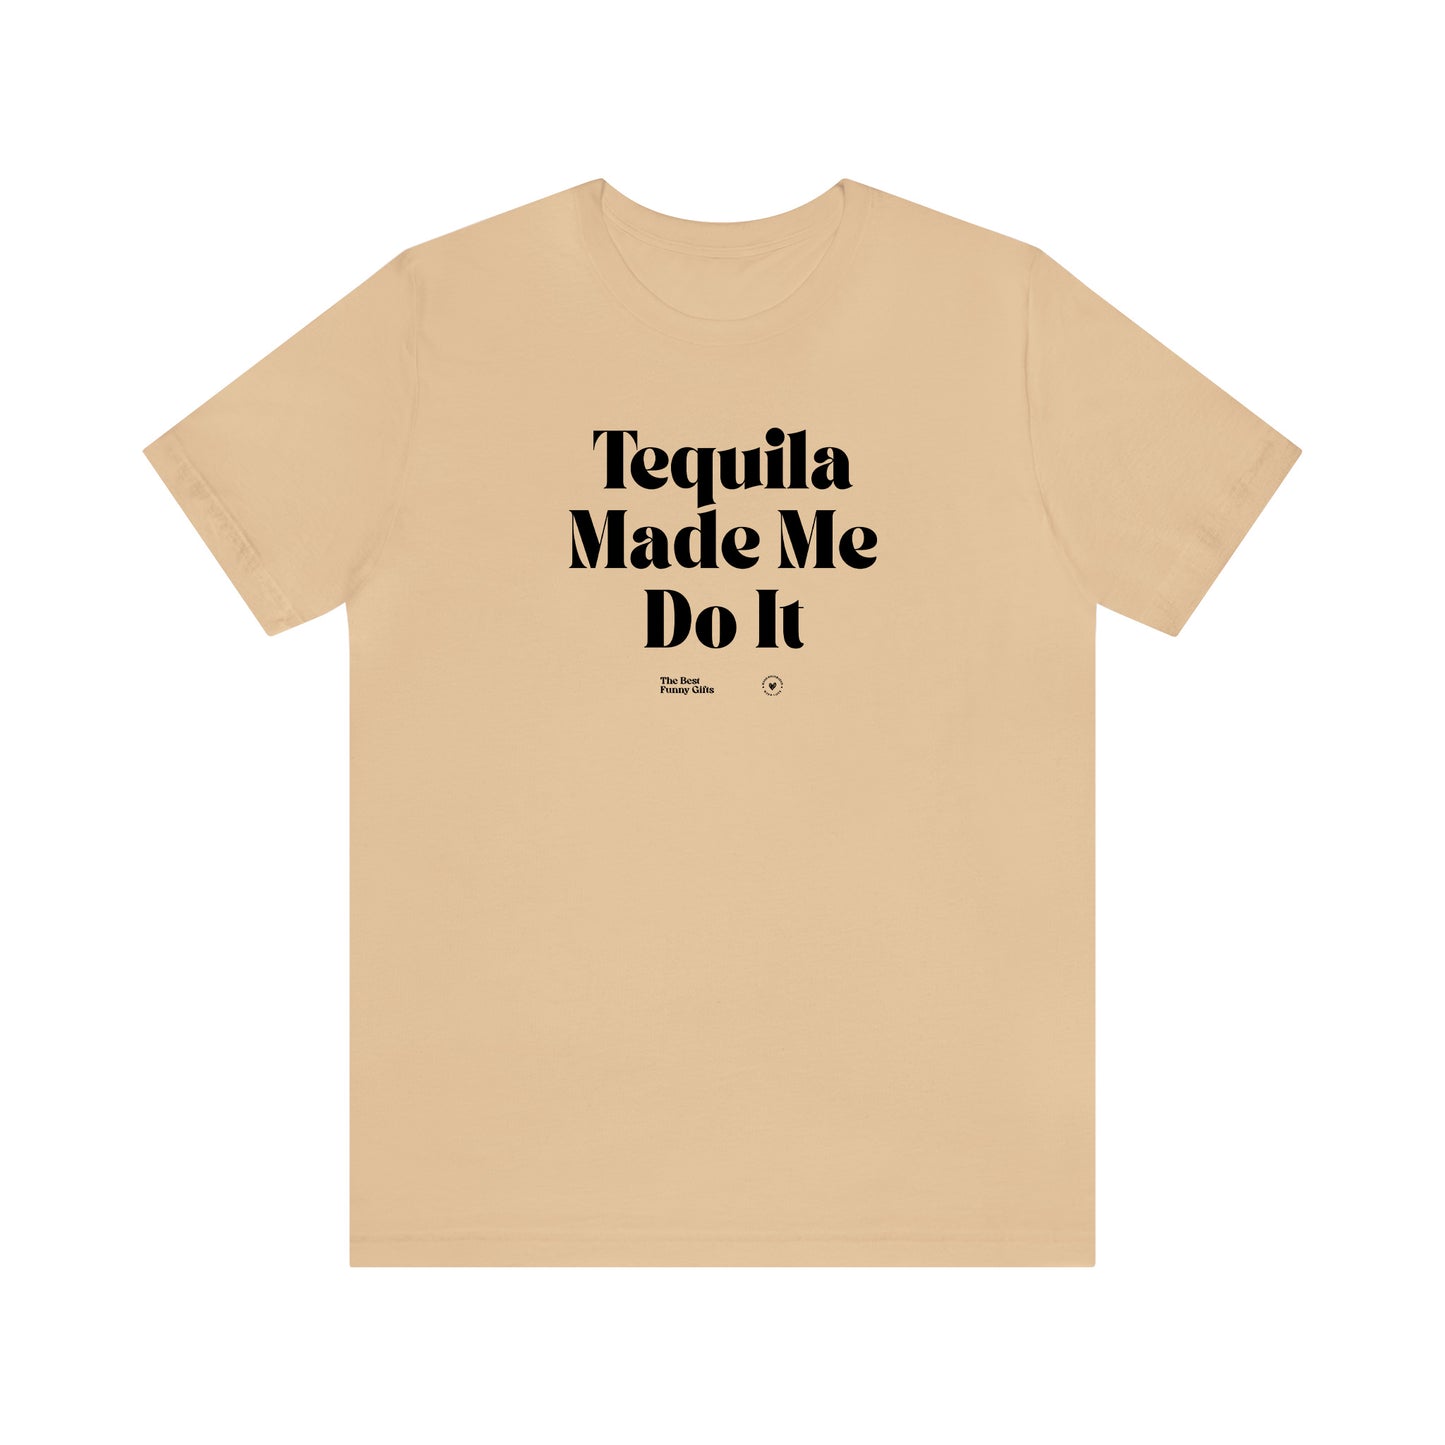 Funny Shirts for Women - Tequila Made Me Do It - Women’s T Shirts